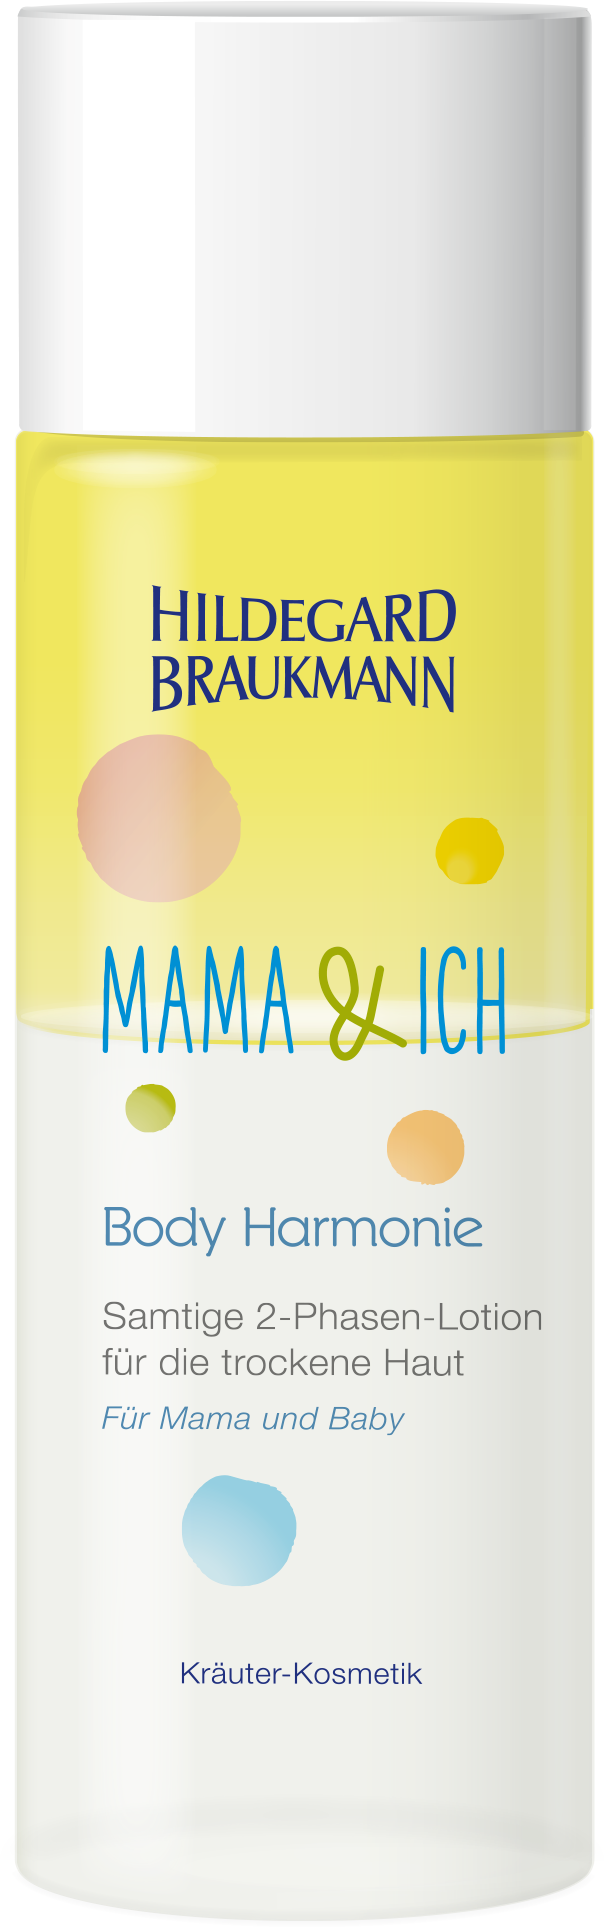 MAMA & ICH Body Harmonie | Hildegard Braukmann